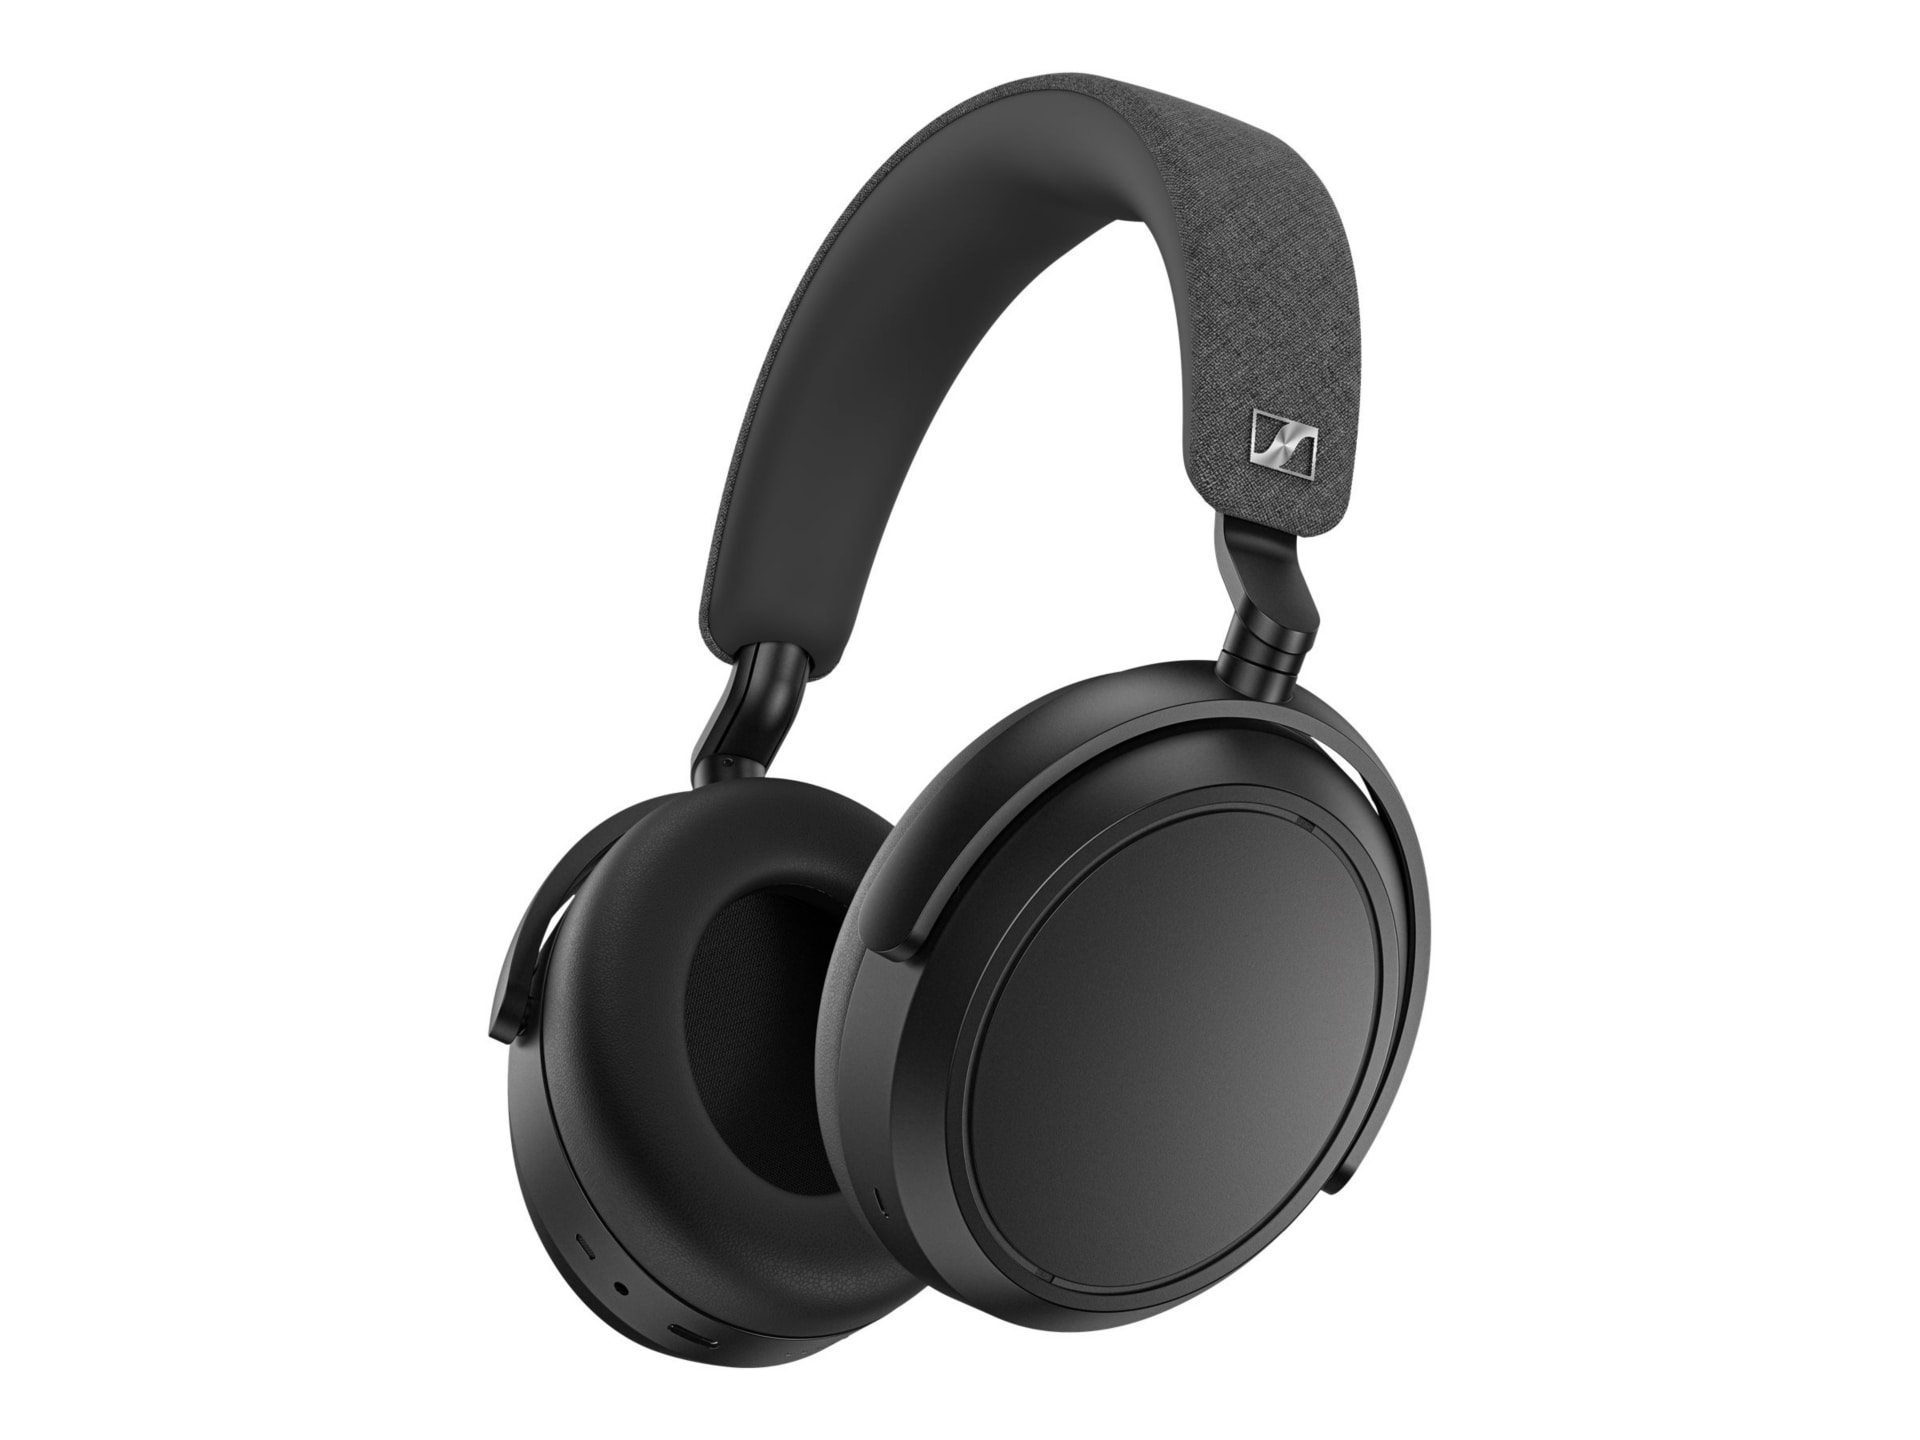 Sennheiser MOMENTUM 4 Wireless - headphones with mic - black